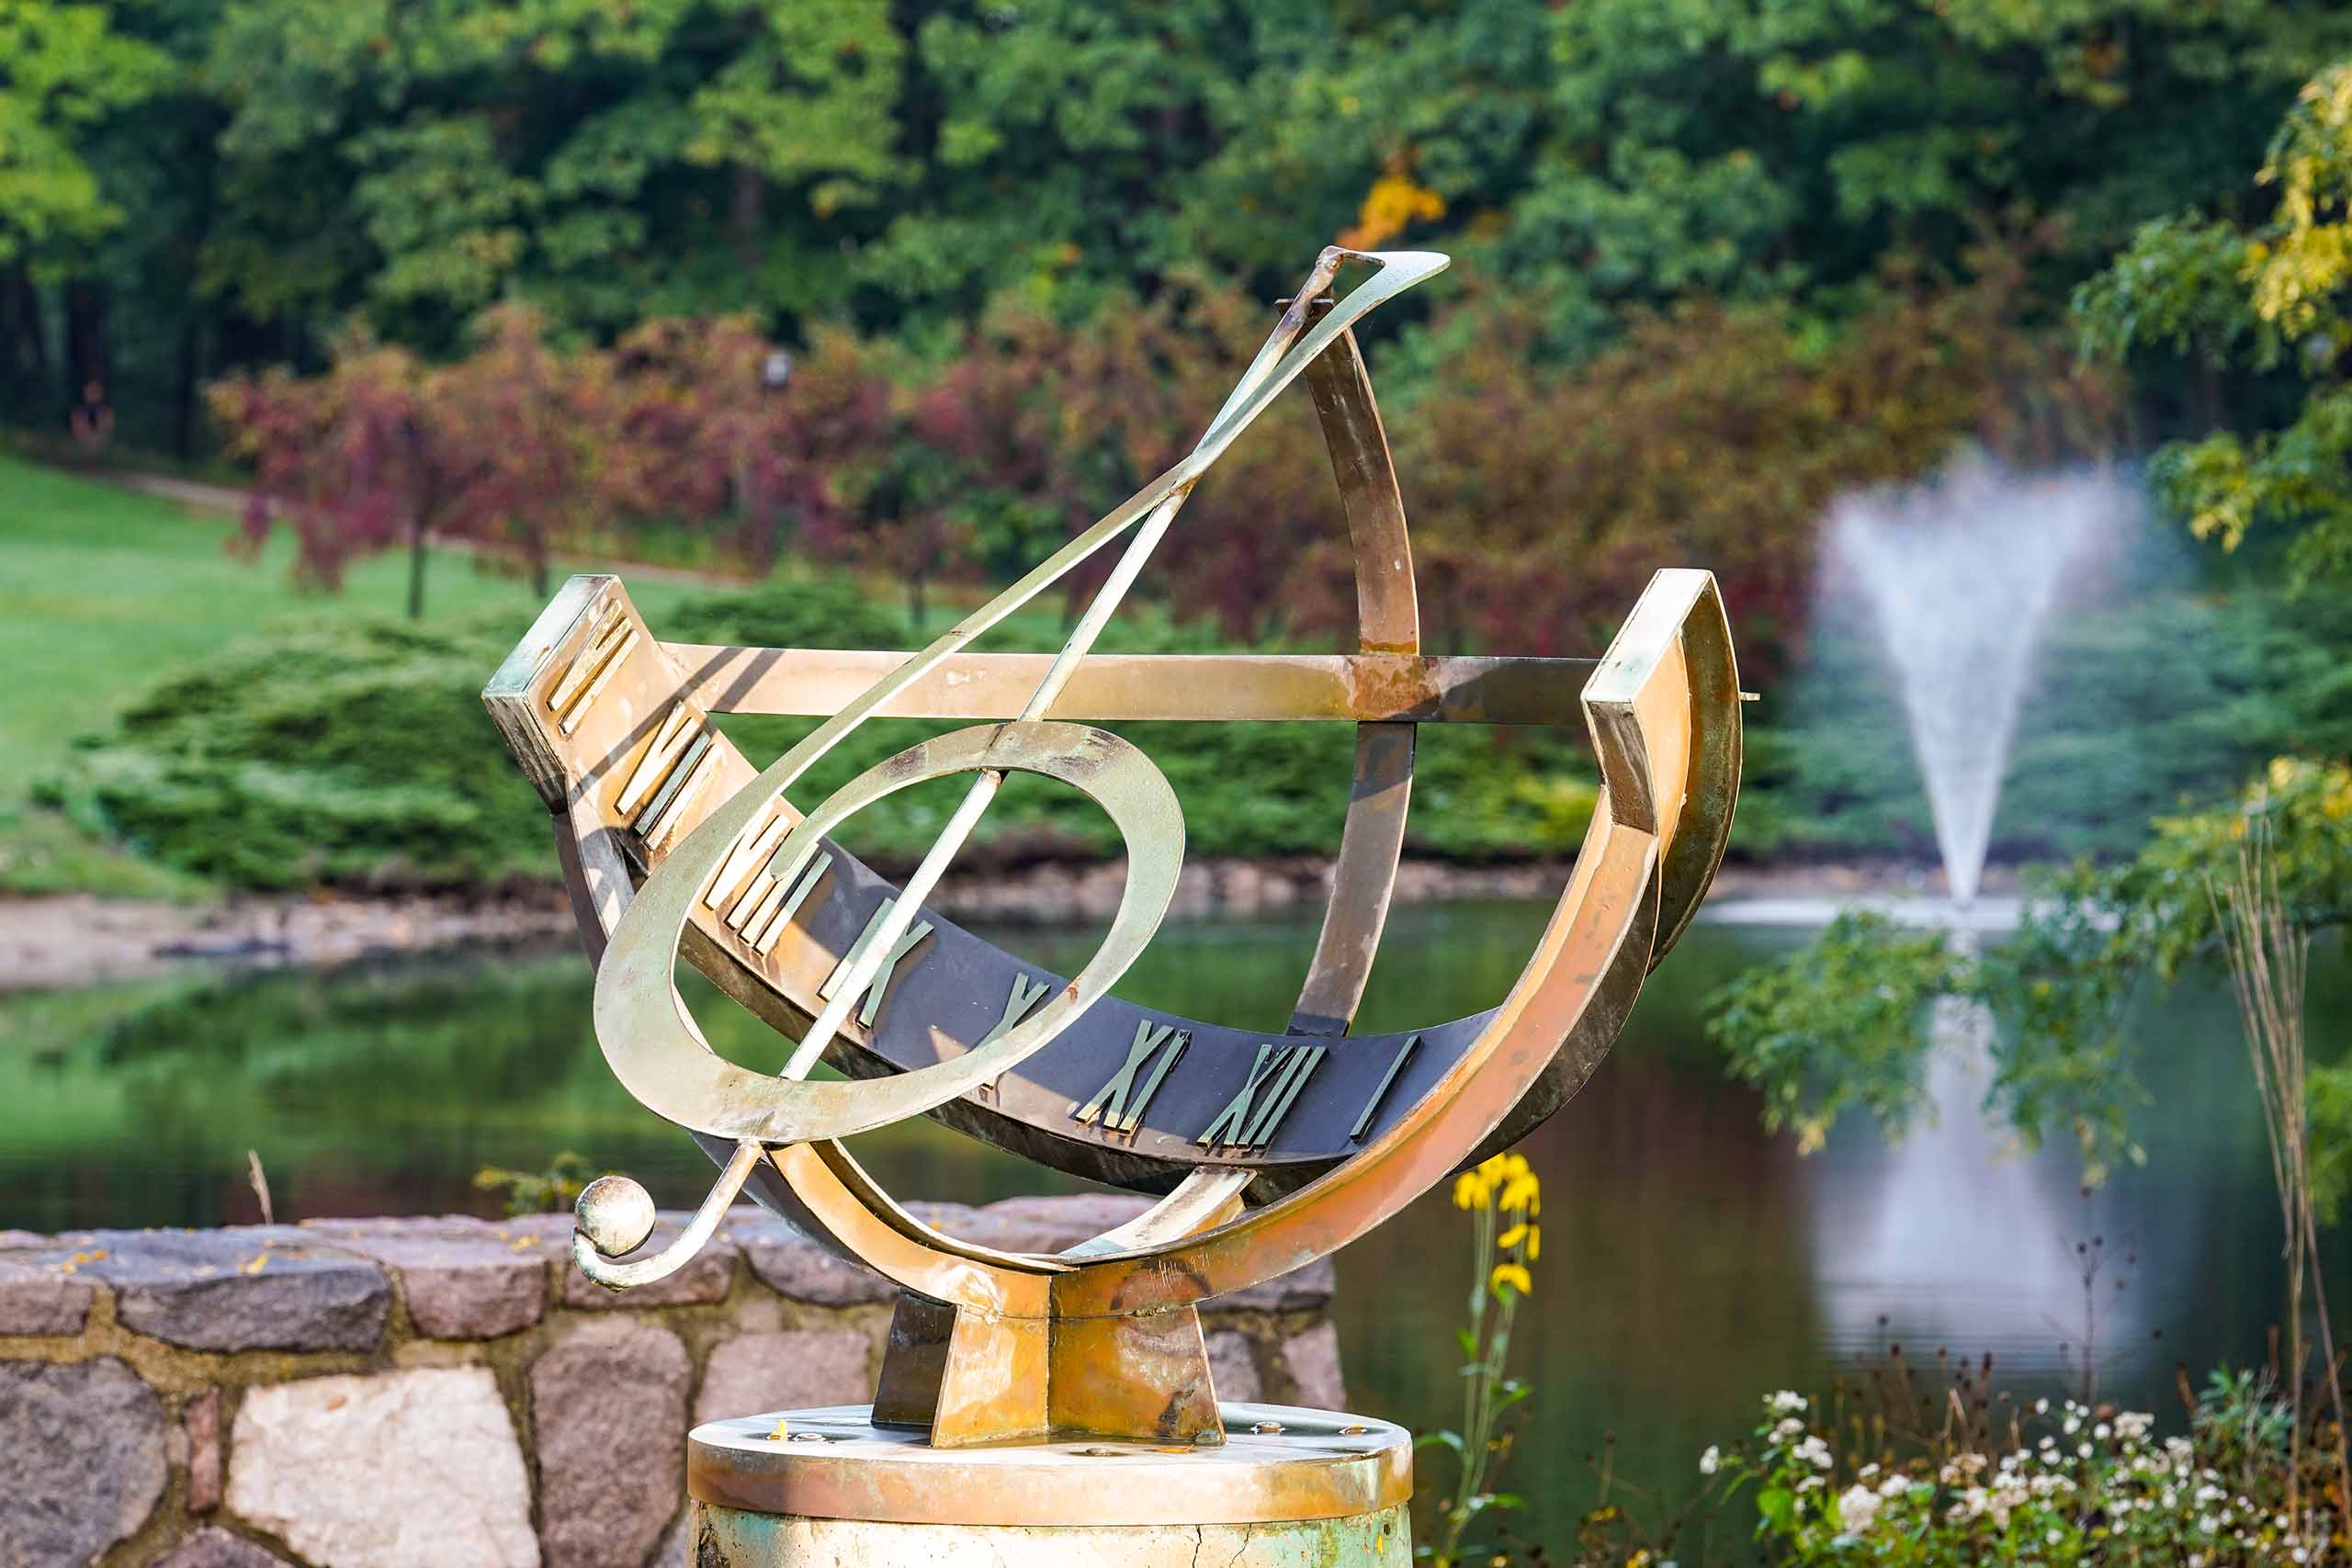 A treble clef sculpture next to the SMTD Pond